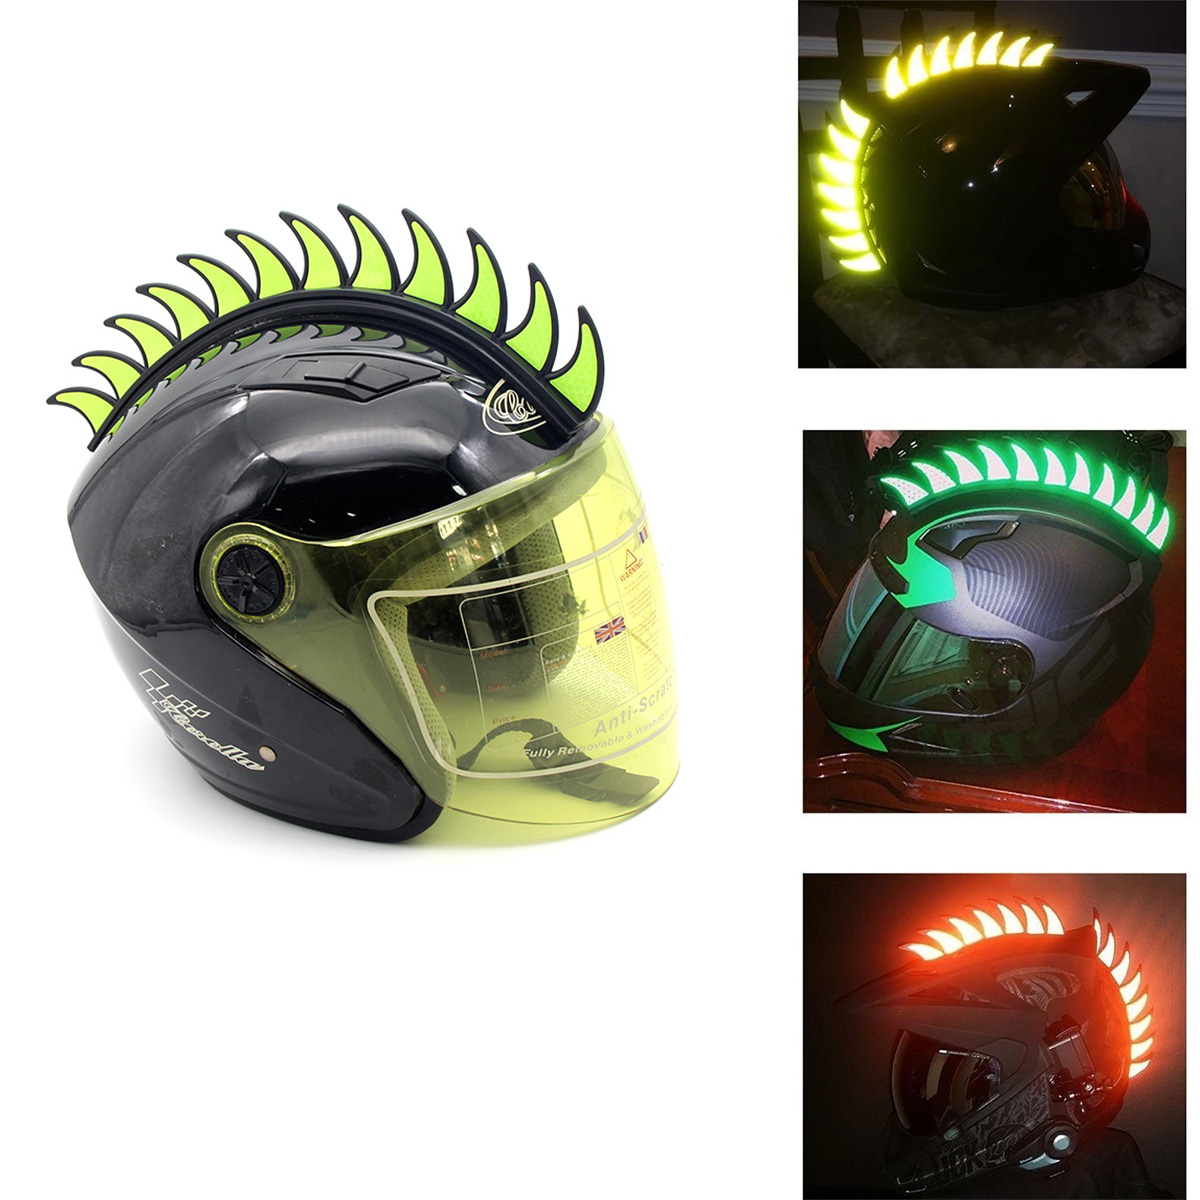 Motorcycle Helmet Reflective Spikes Add On | Moto Gear Knowledge